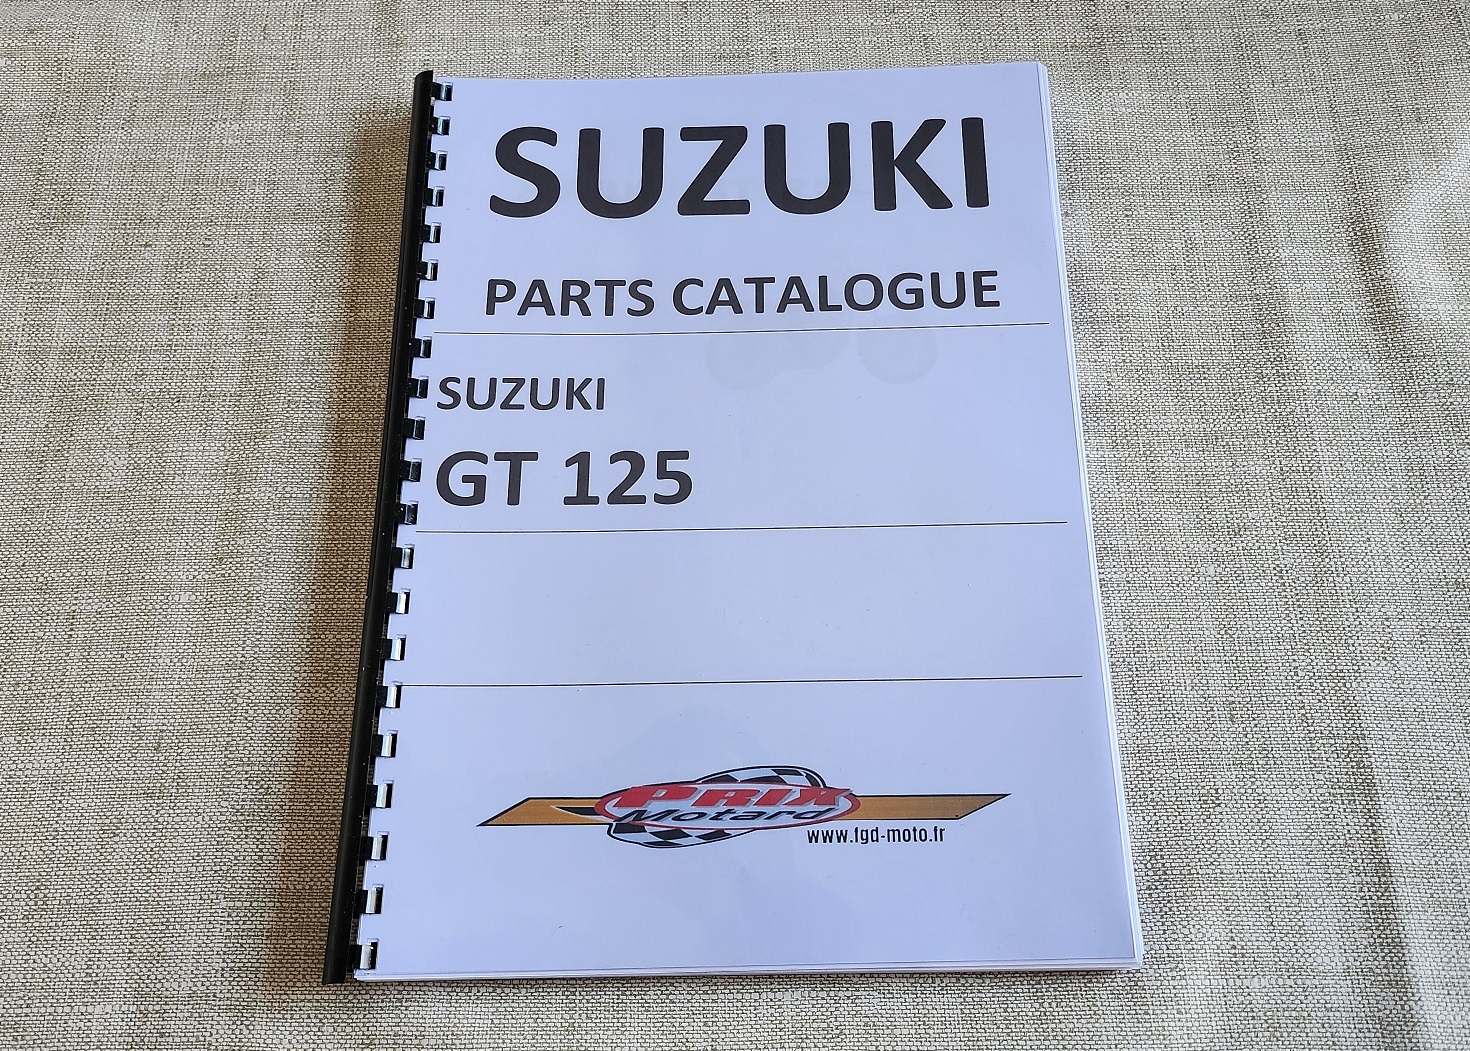 SUZUKI GT 125 PART LIST CATALOGUE PIECES